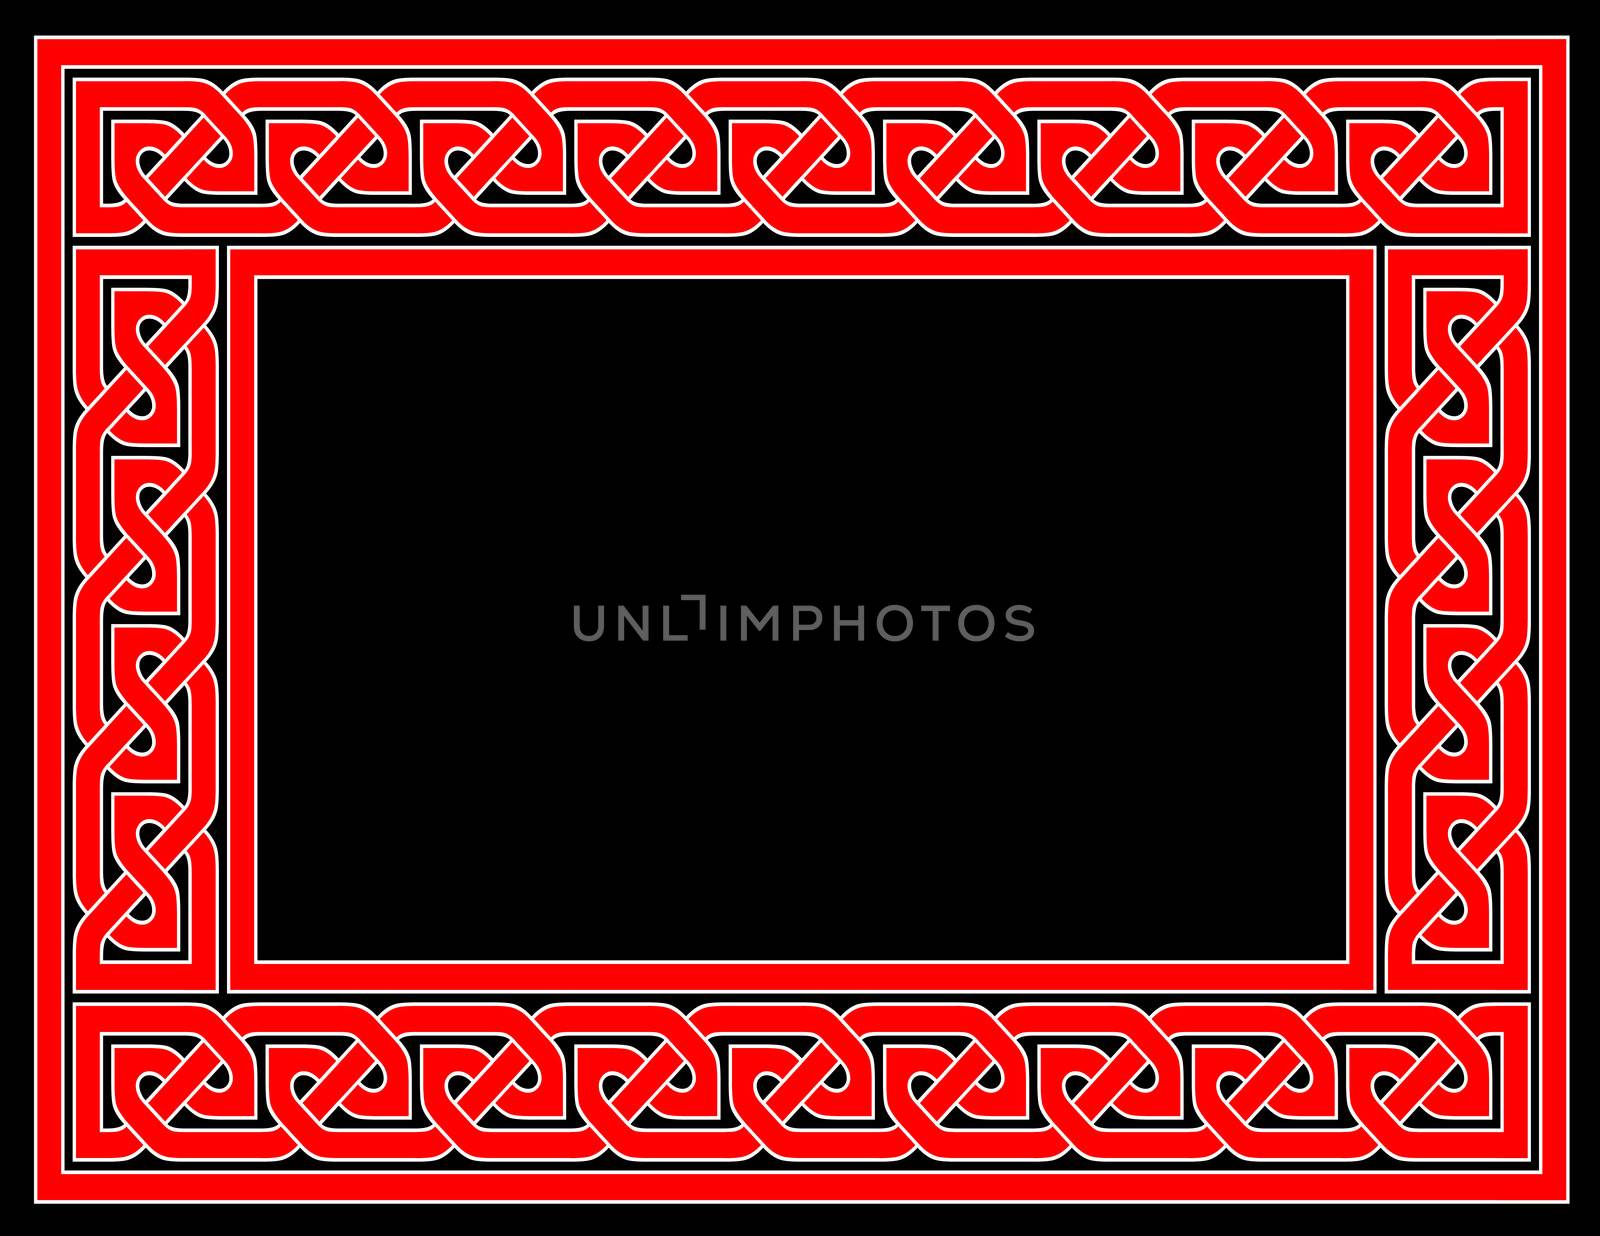 A red Celtic knot frame with black background, JPG version.